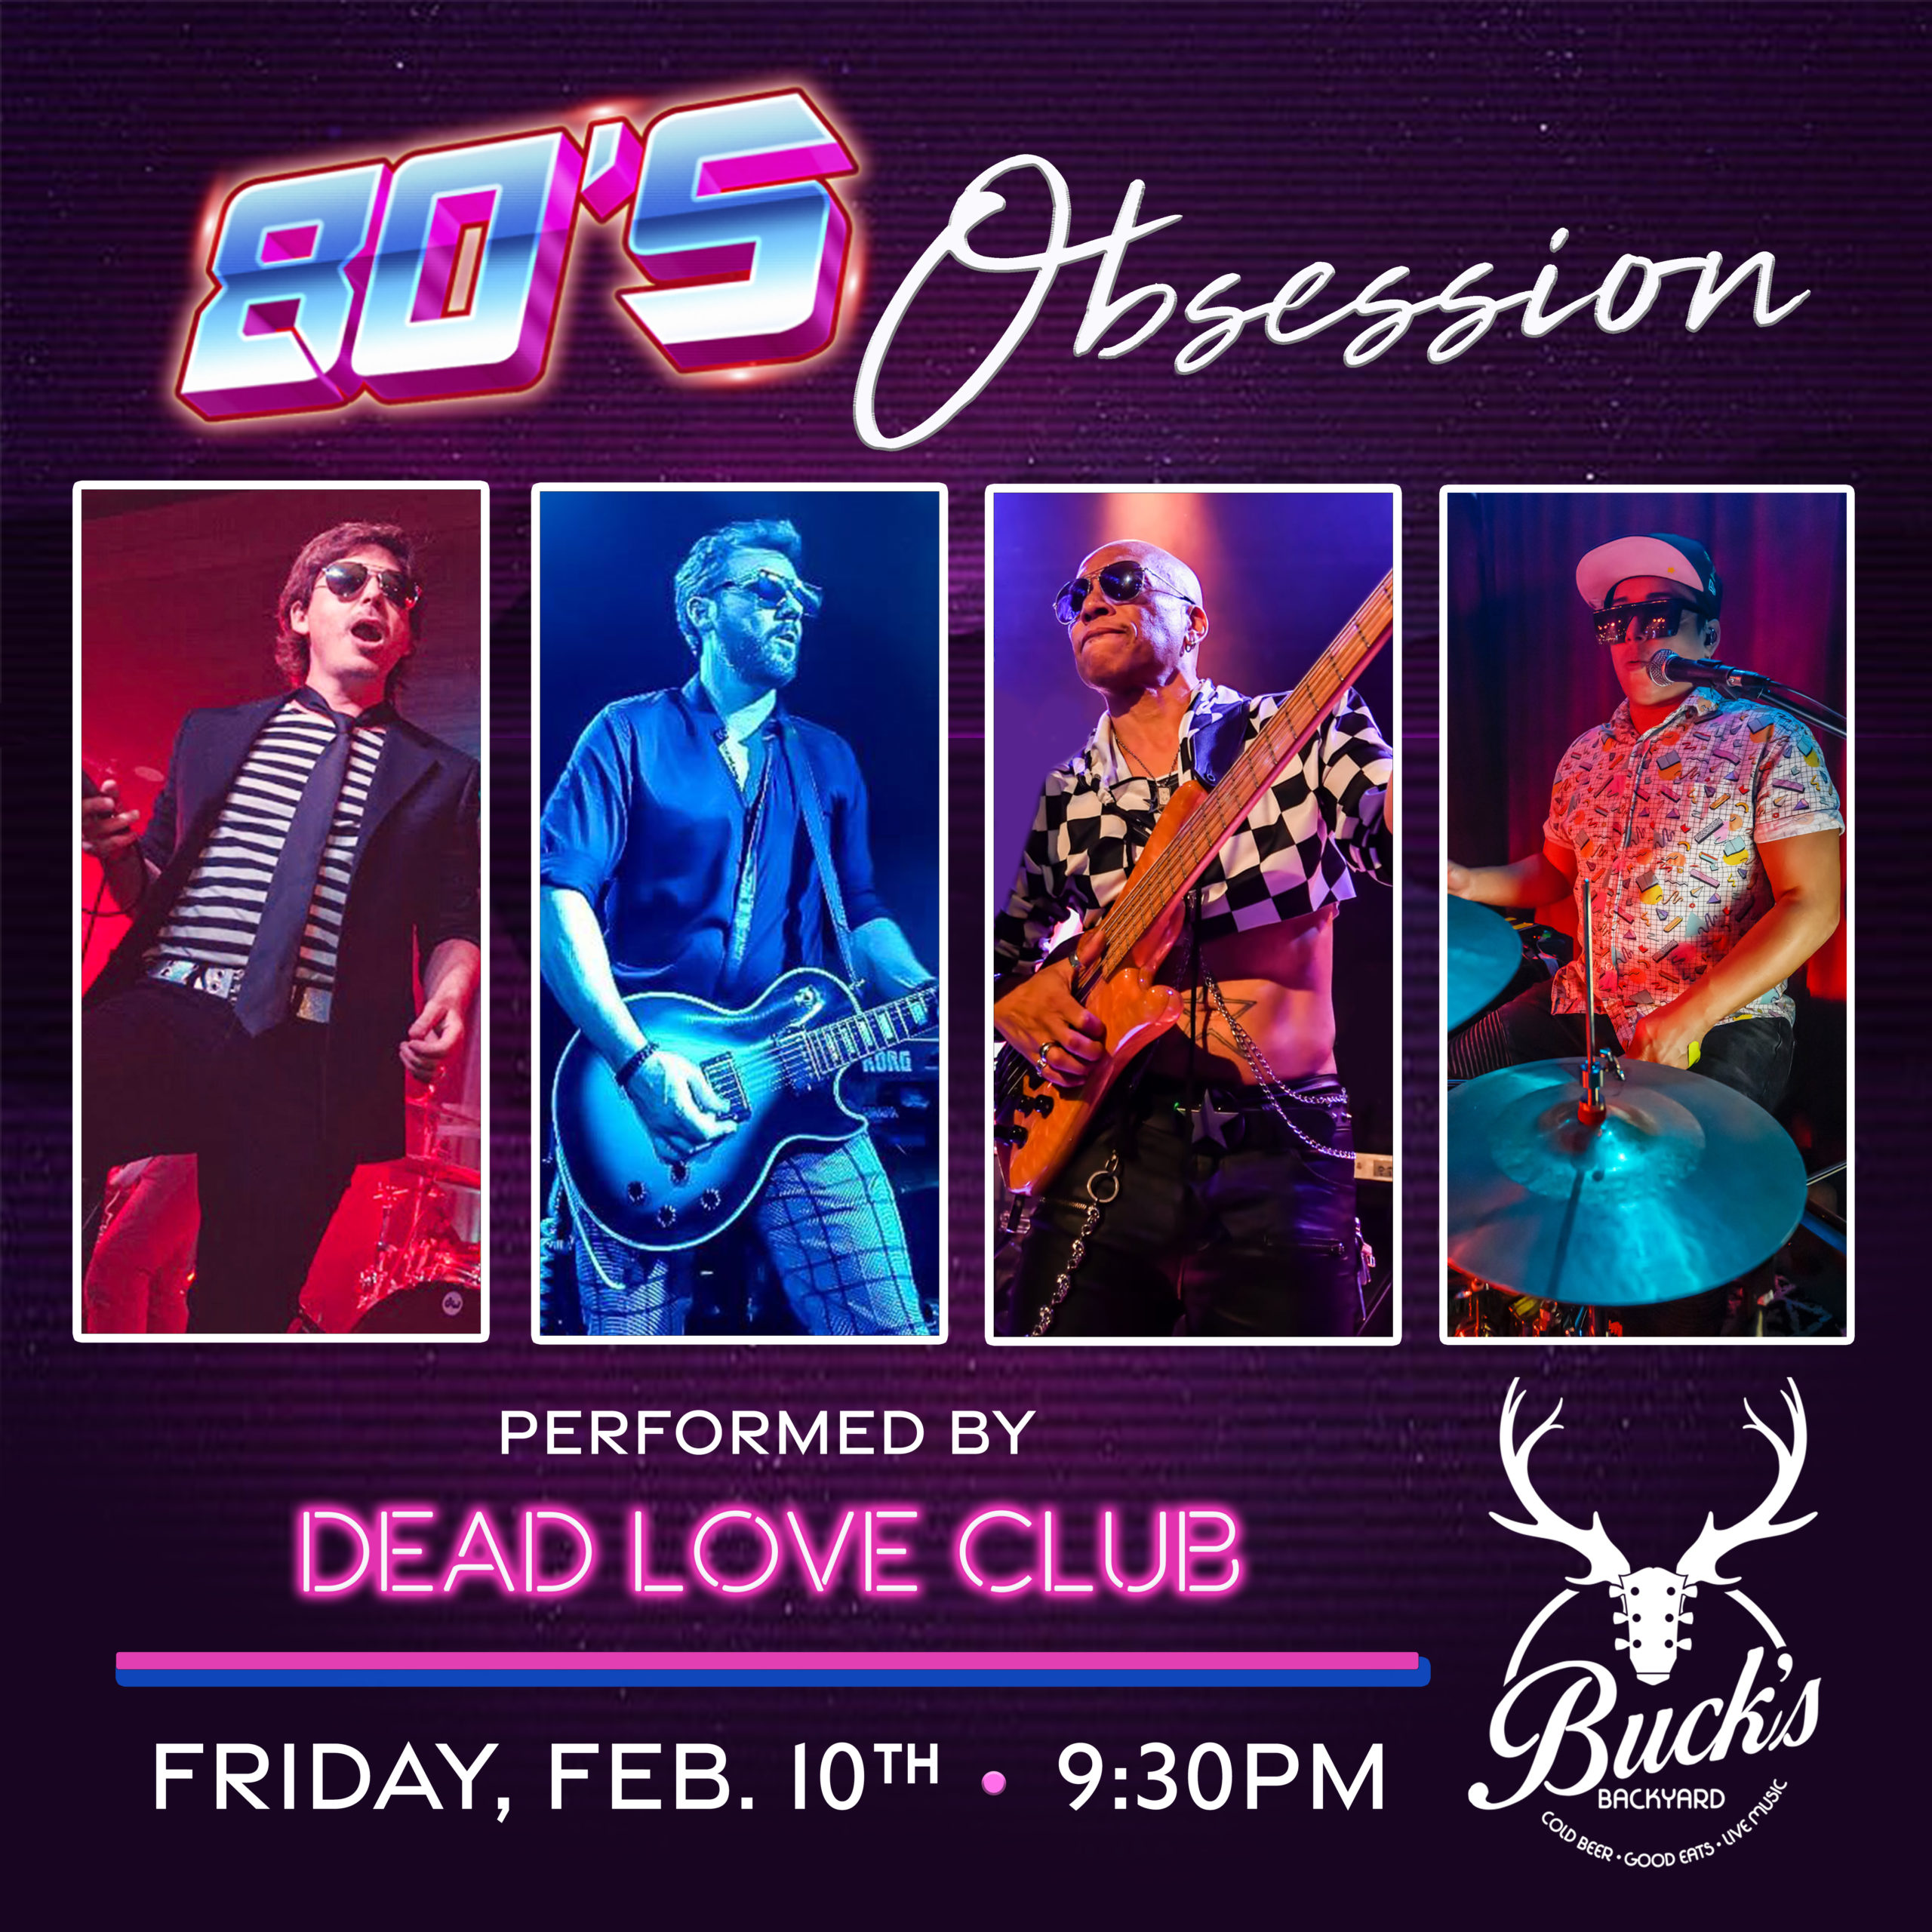 80s Obsession - Dead Love Club - Buck's Backyard